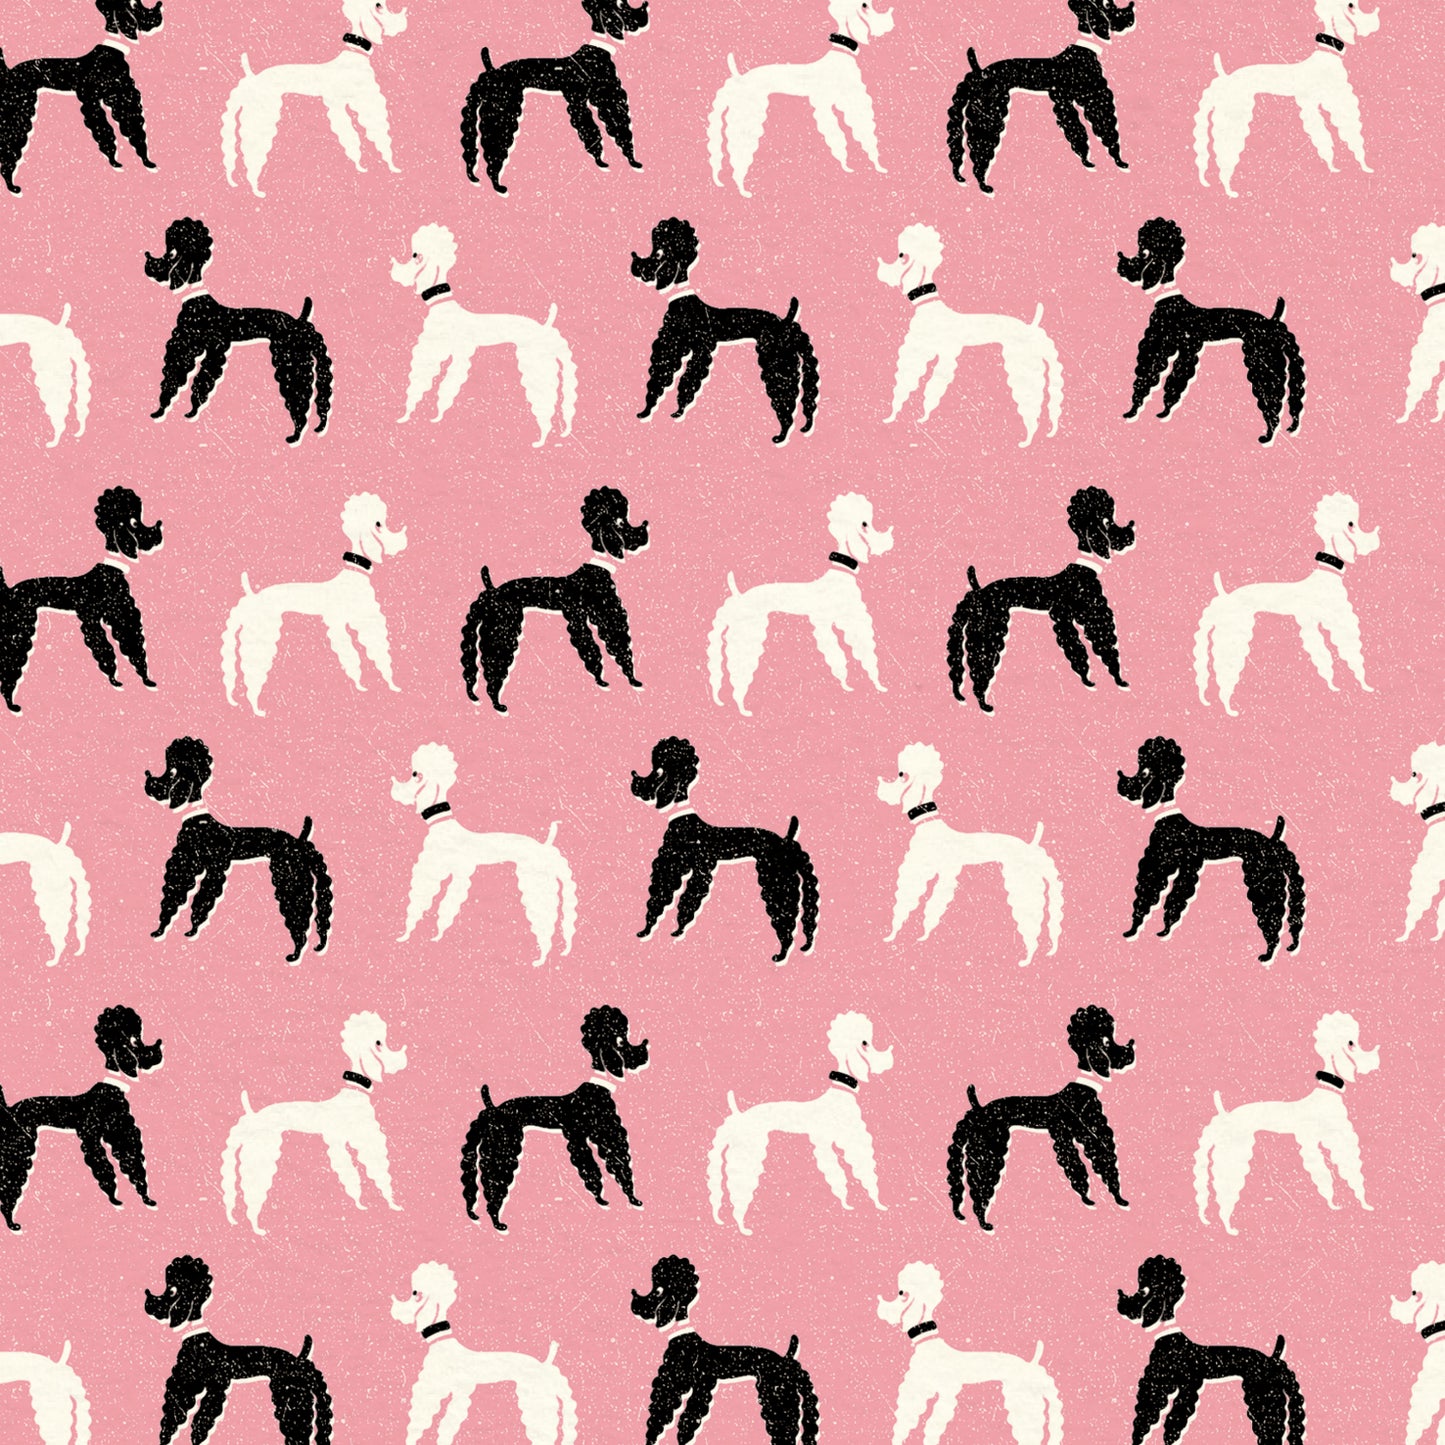 Just Patterns: Poodles, Pink